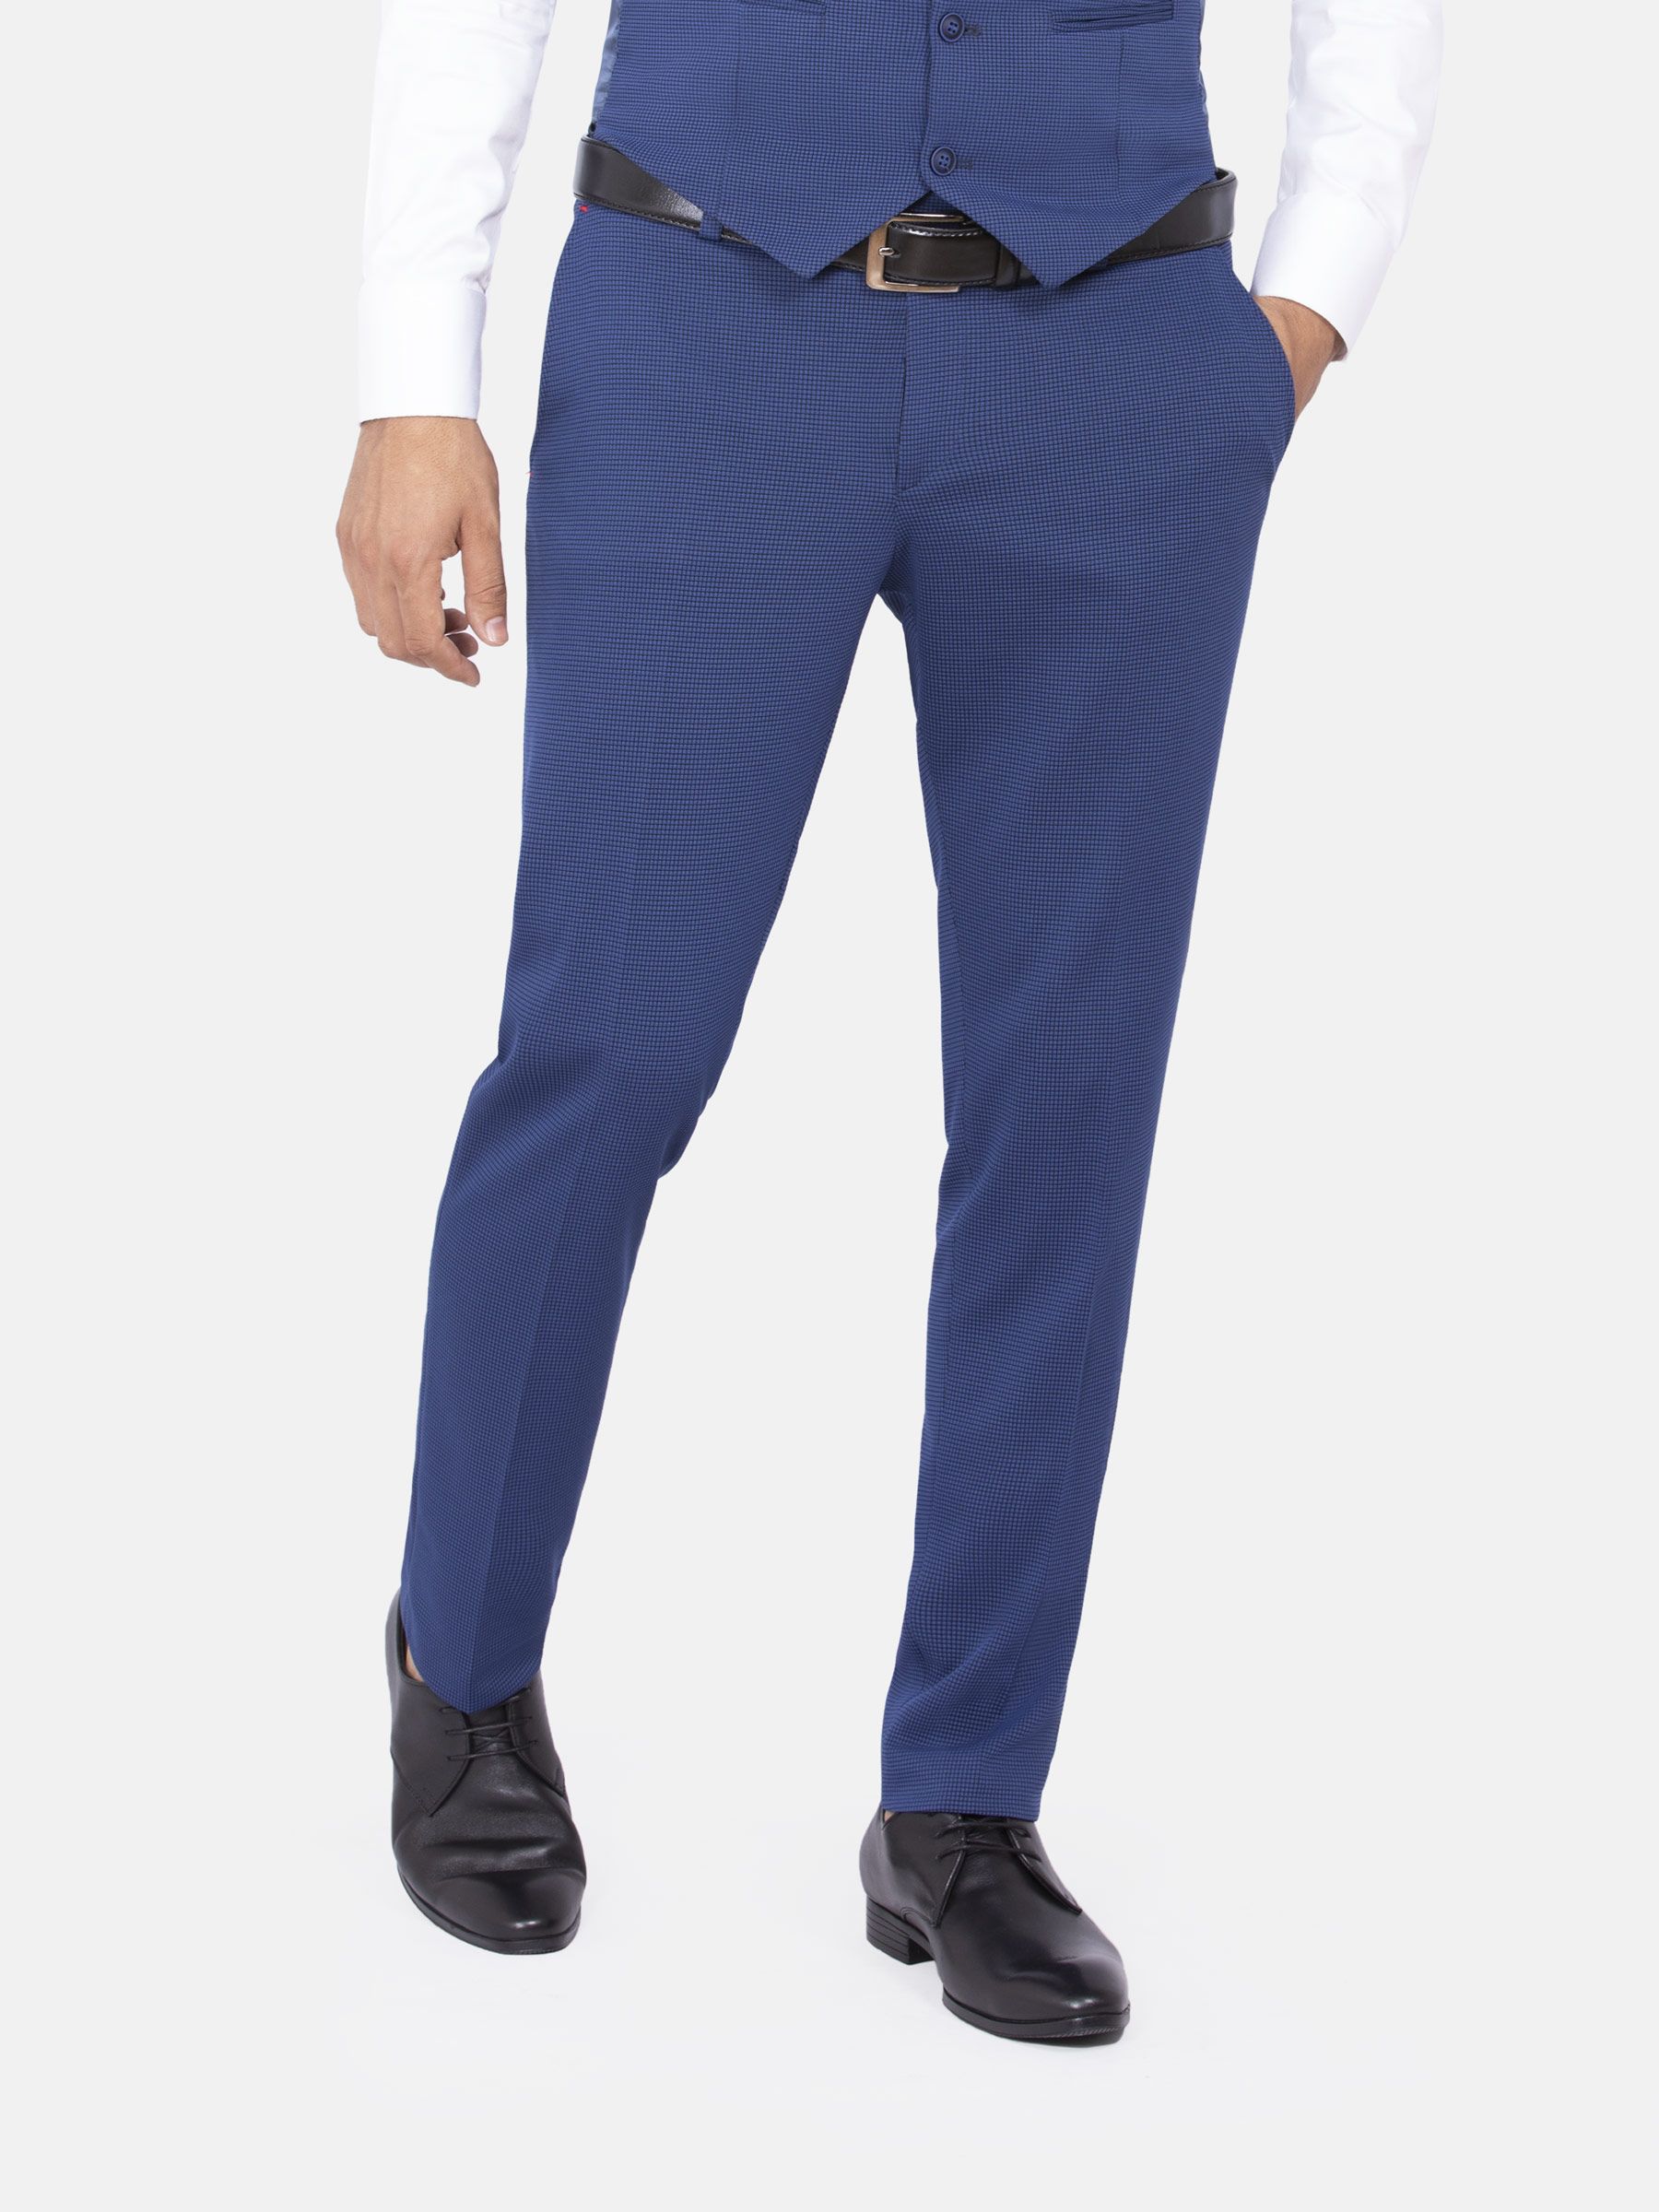 Buy Oyster Suit Pant Ink Blue Online | Australia